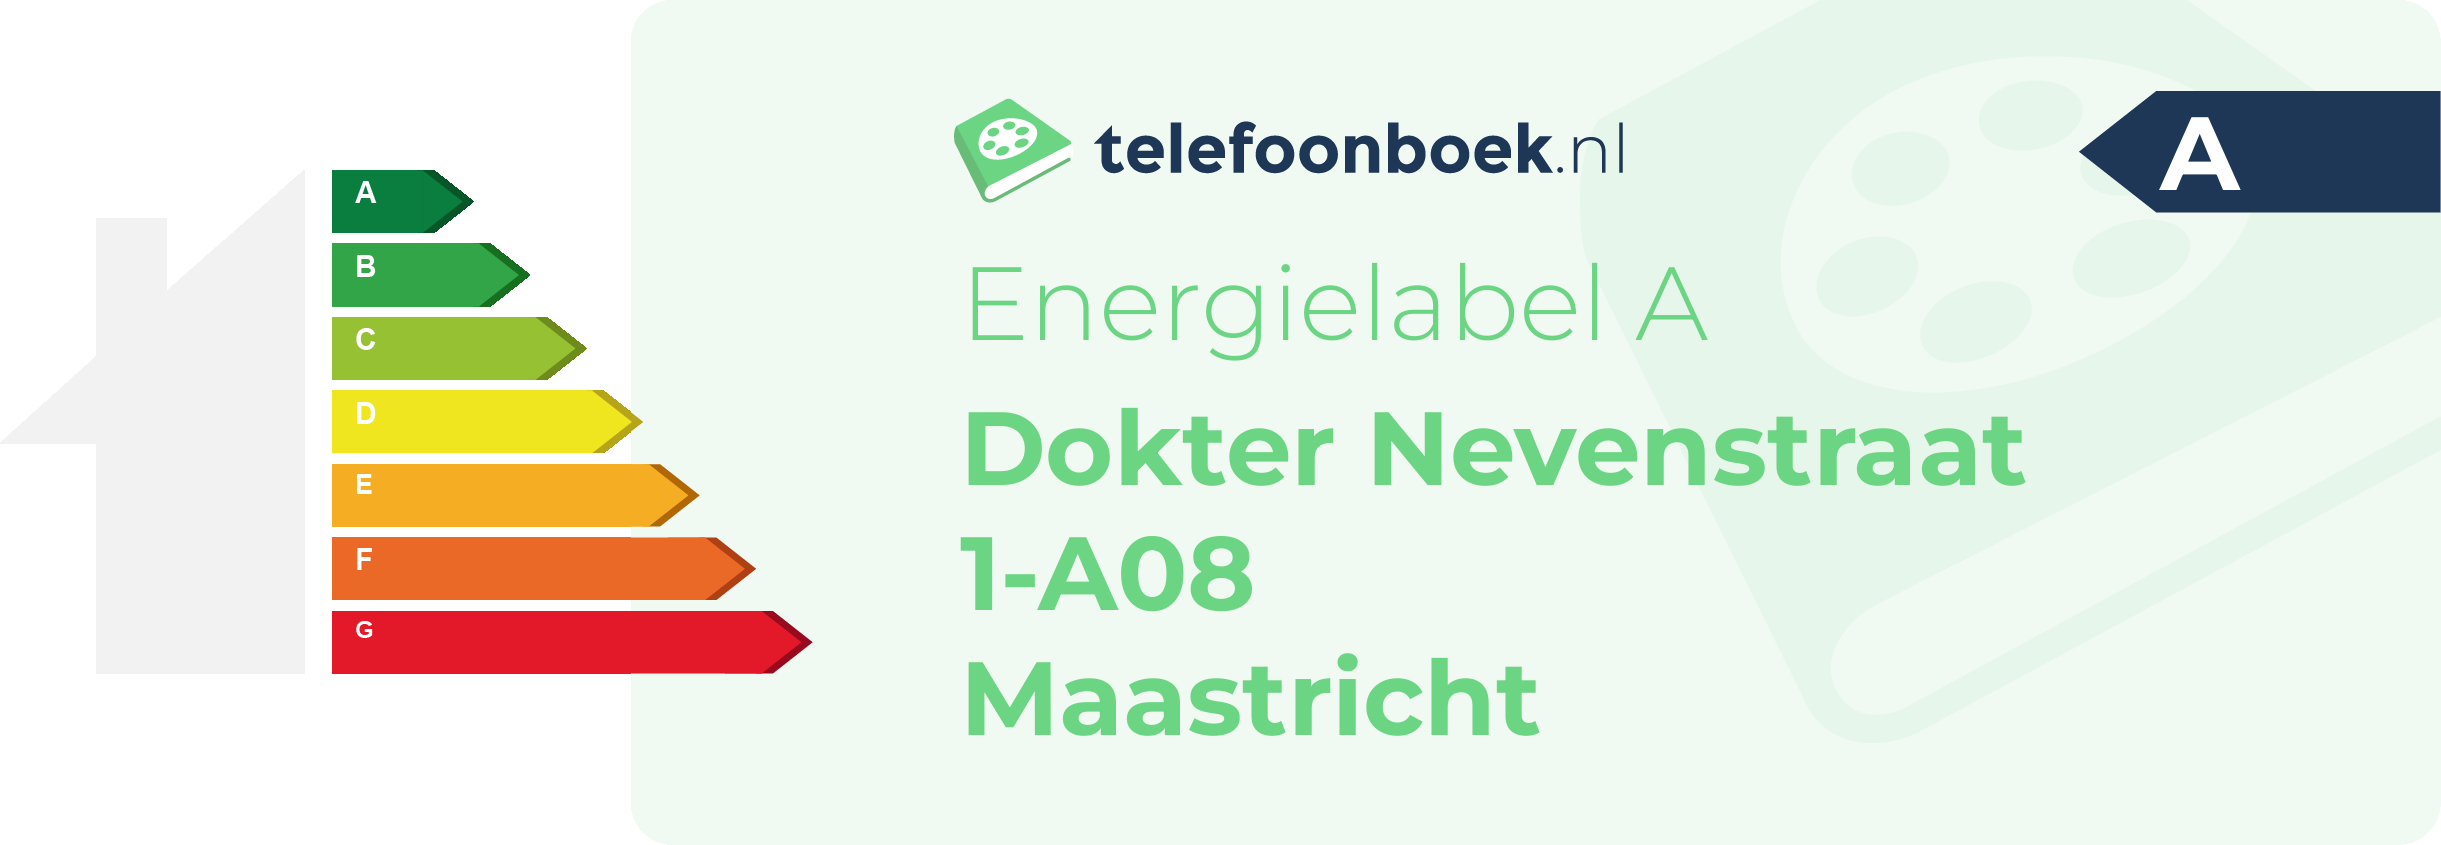 Energielabel Dokter Nevenstraat 1-A08 Maastricht